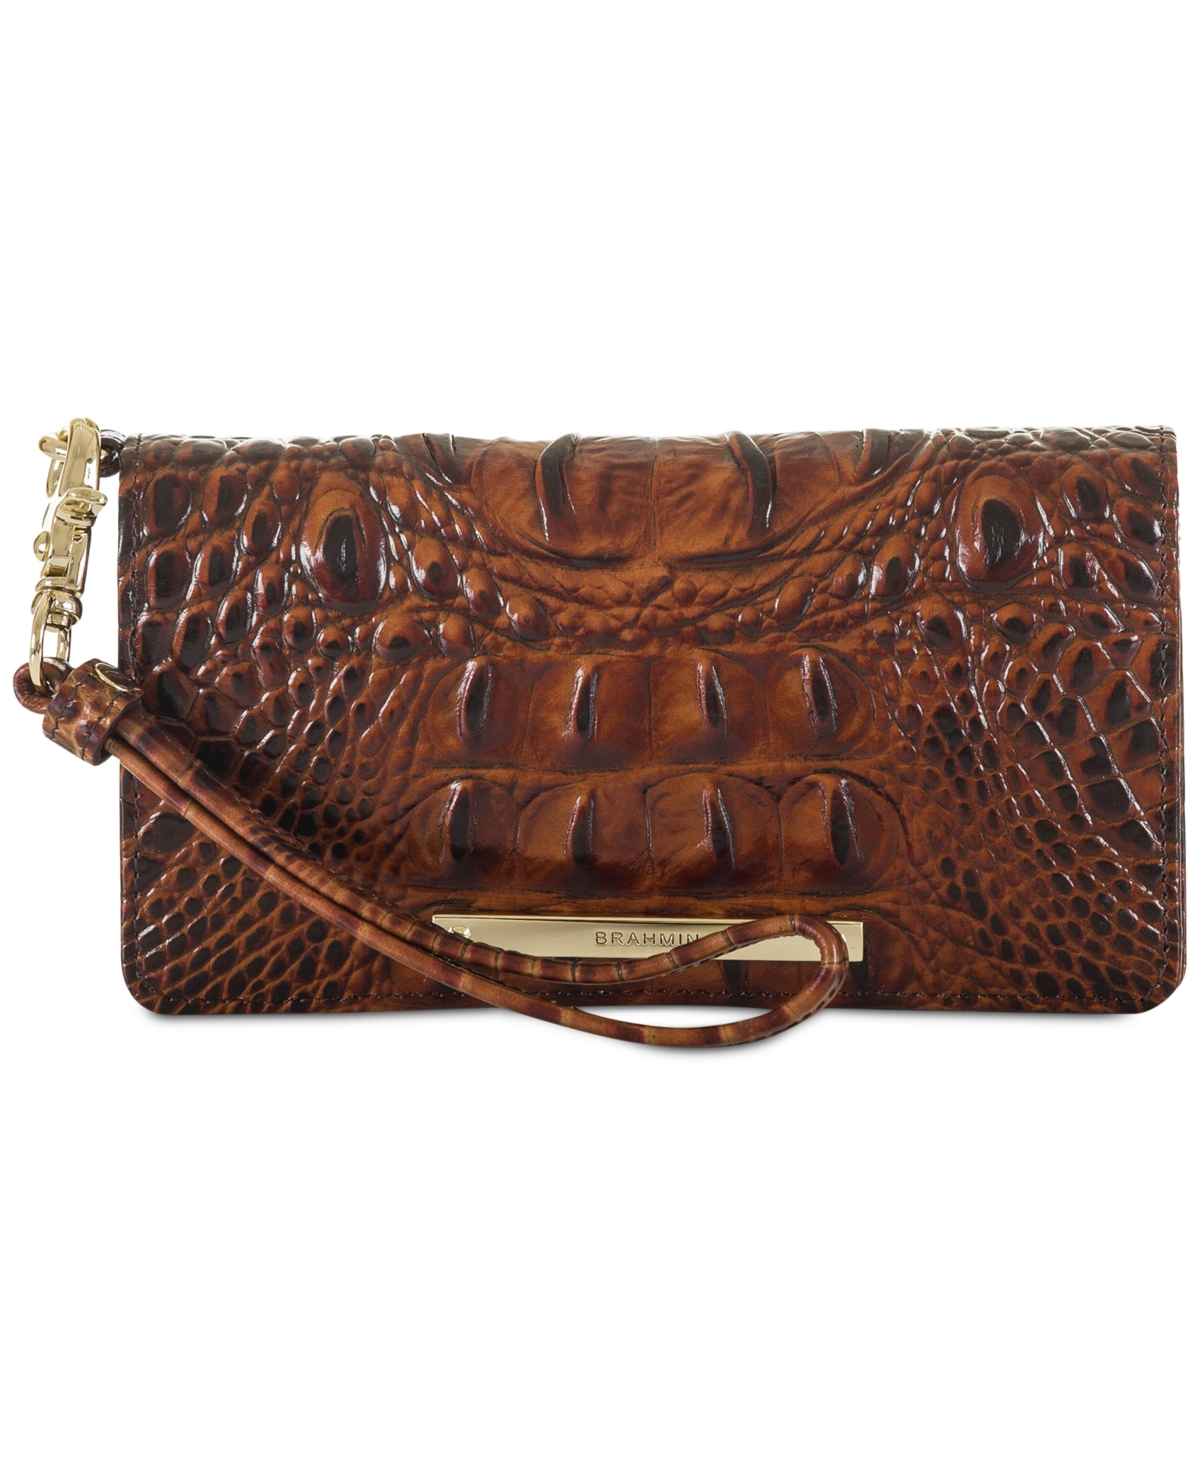 Debra Melbourne Embossed Leather Wallet - Pecan/Gold